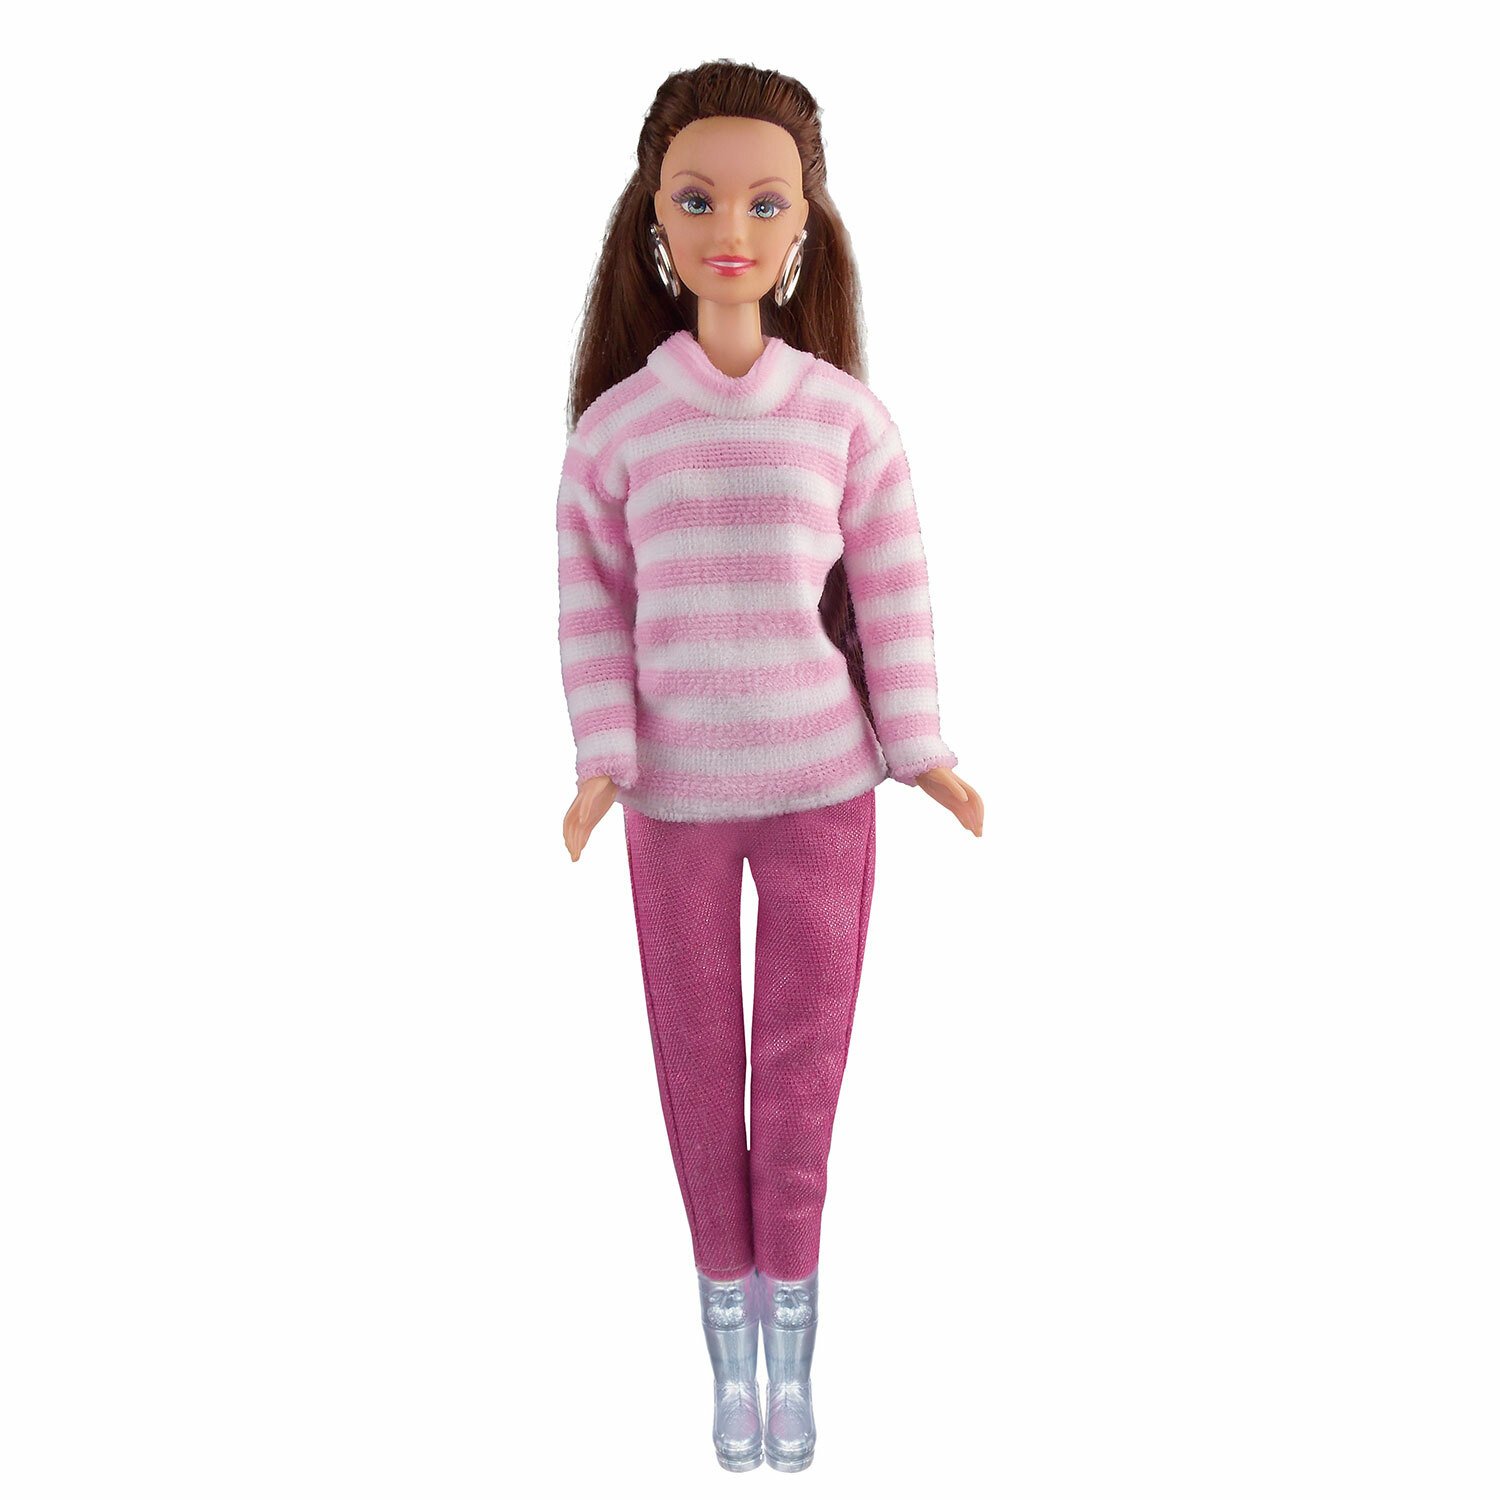 Набор ToysLab Кукла Ася Зимняя красавица 28 см вариант 1